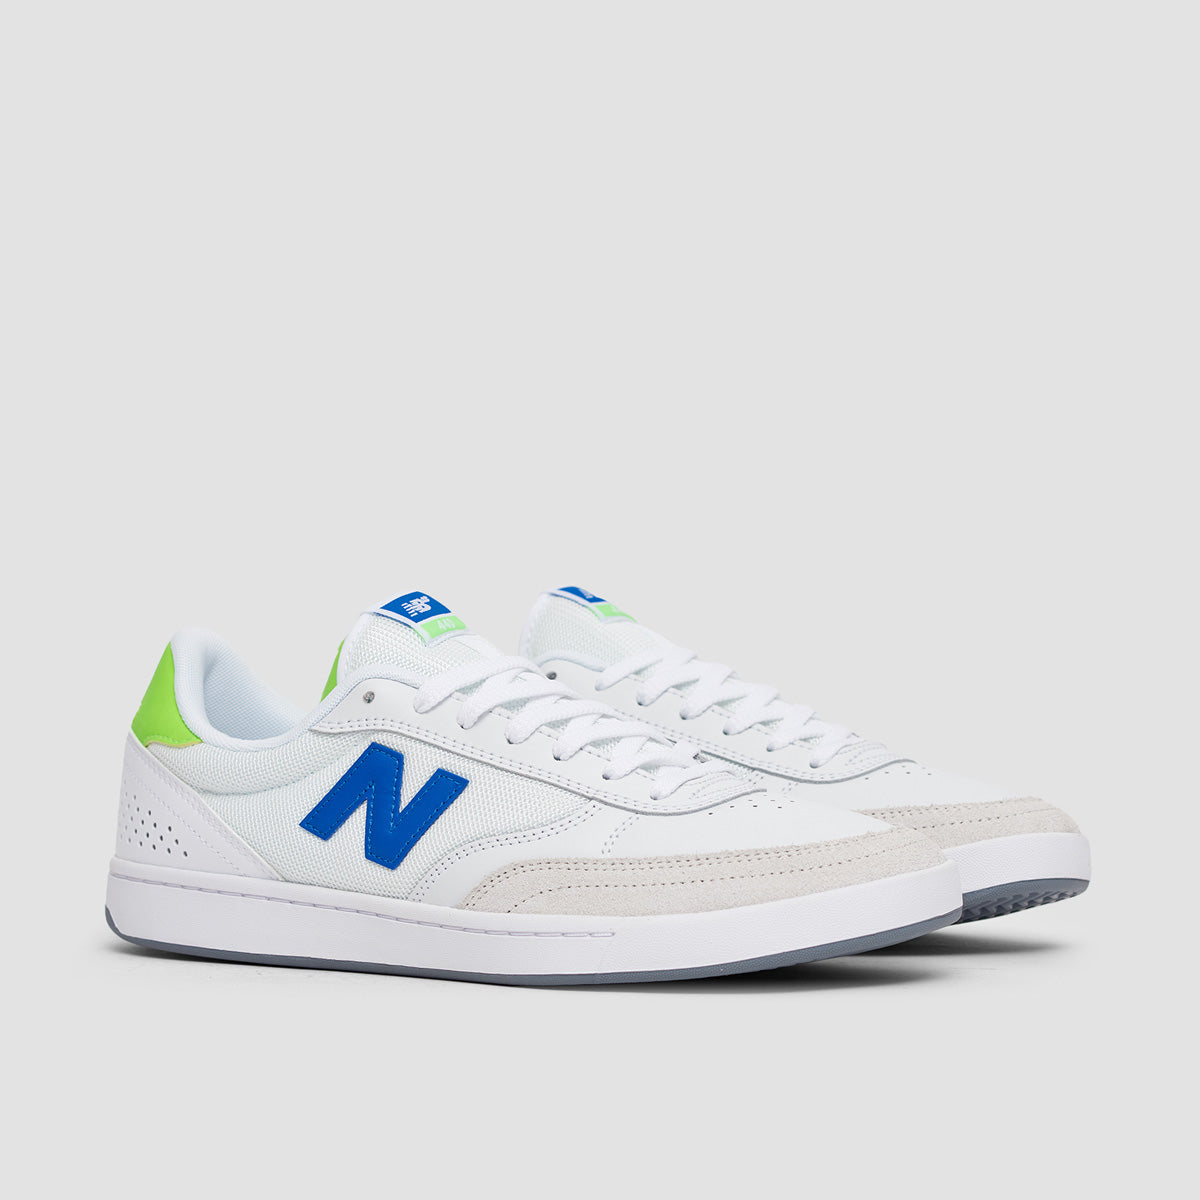 New Balance Numeric 440 Shoes - White/Royal